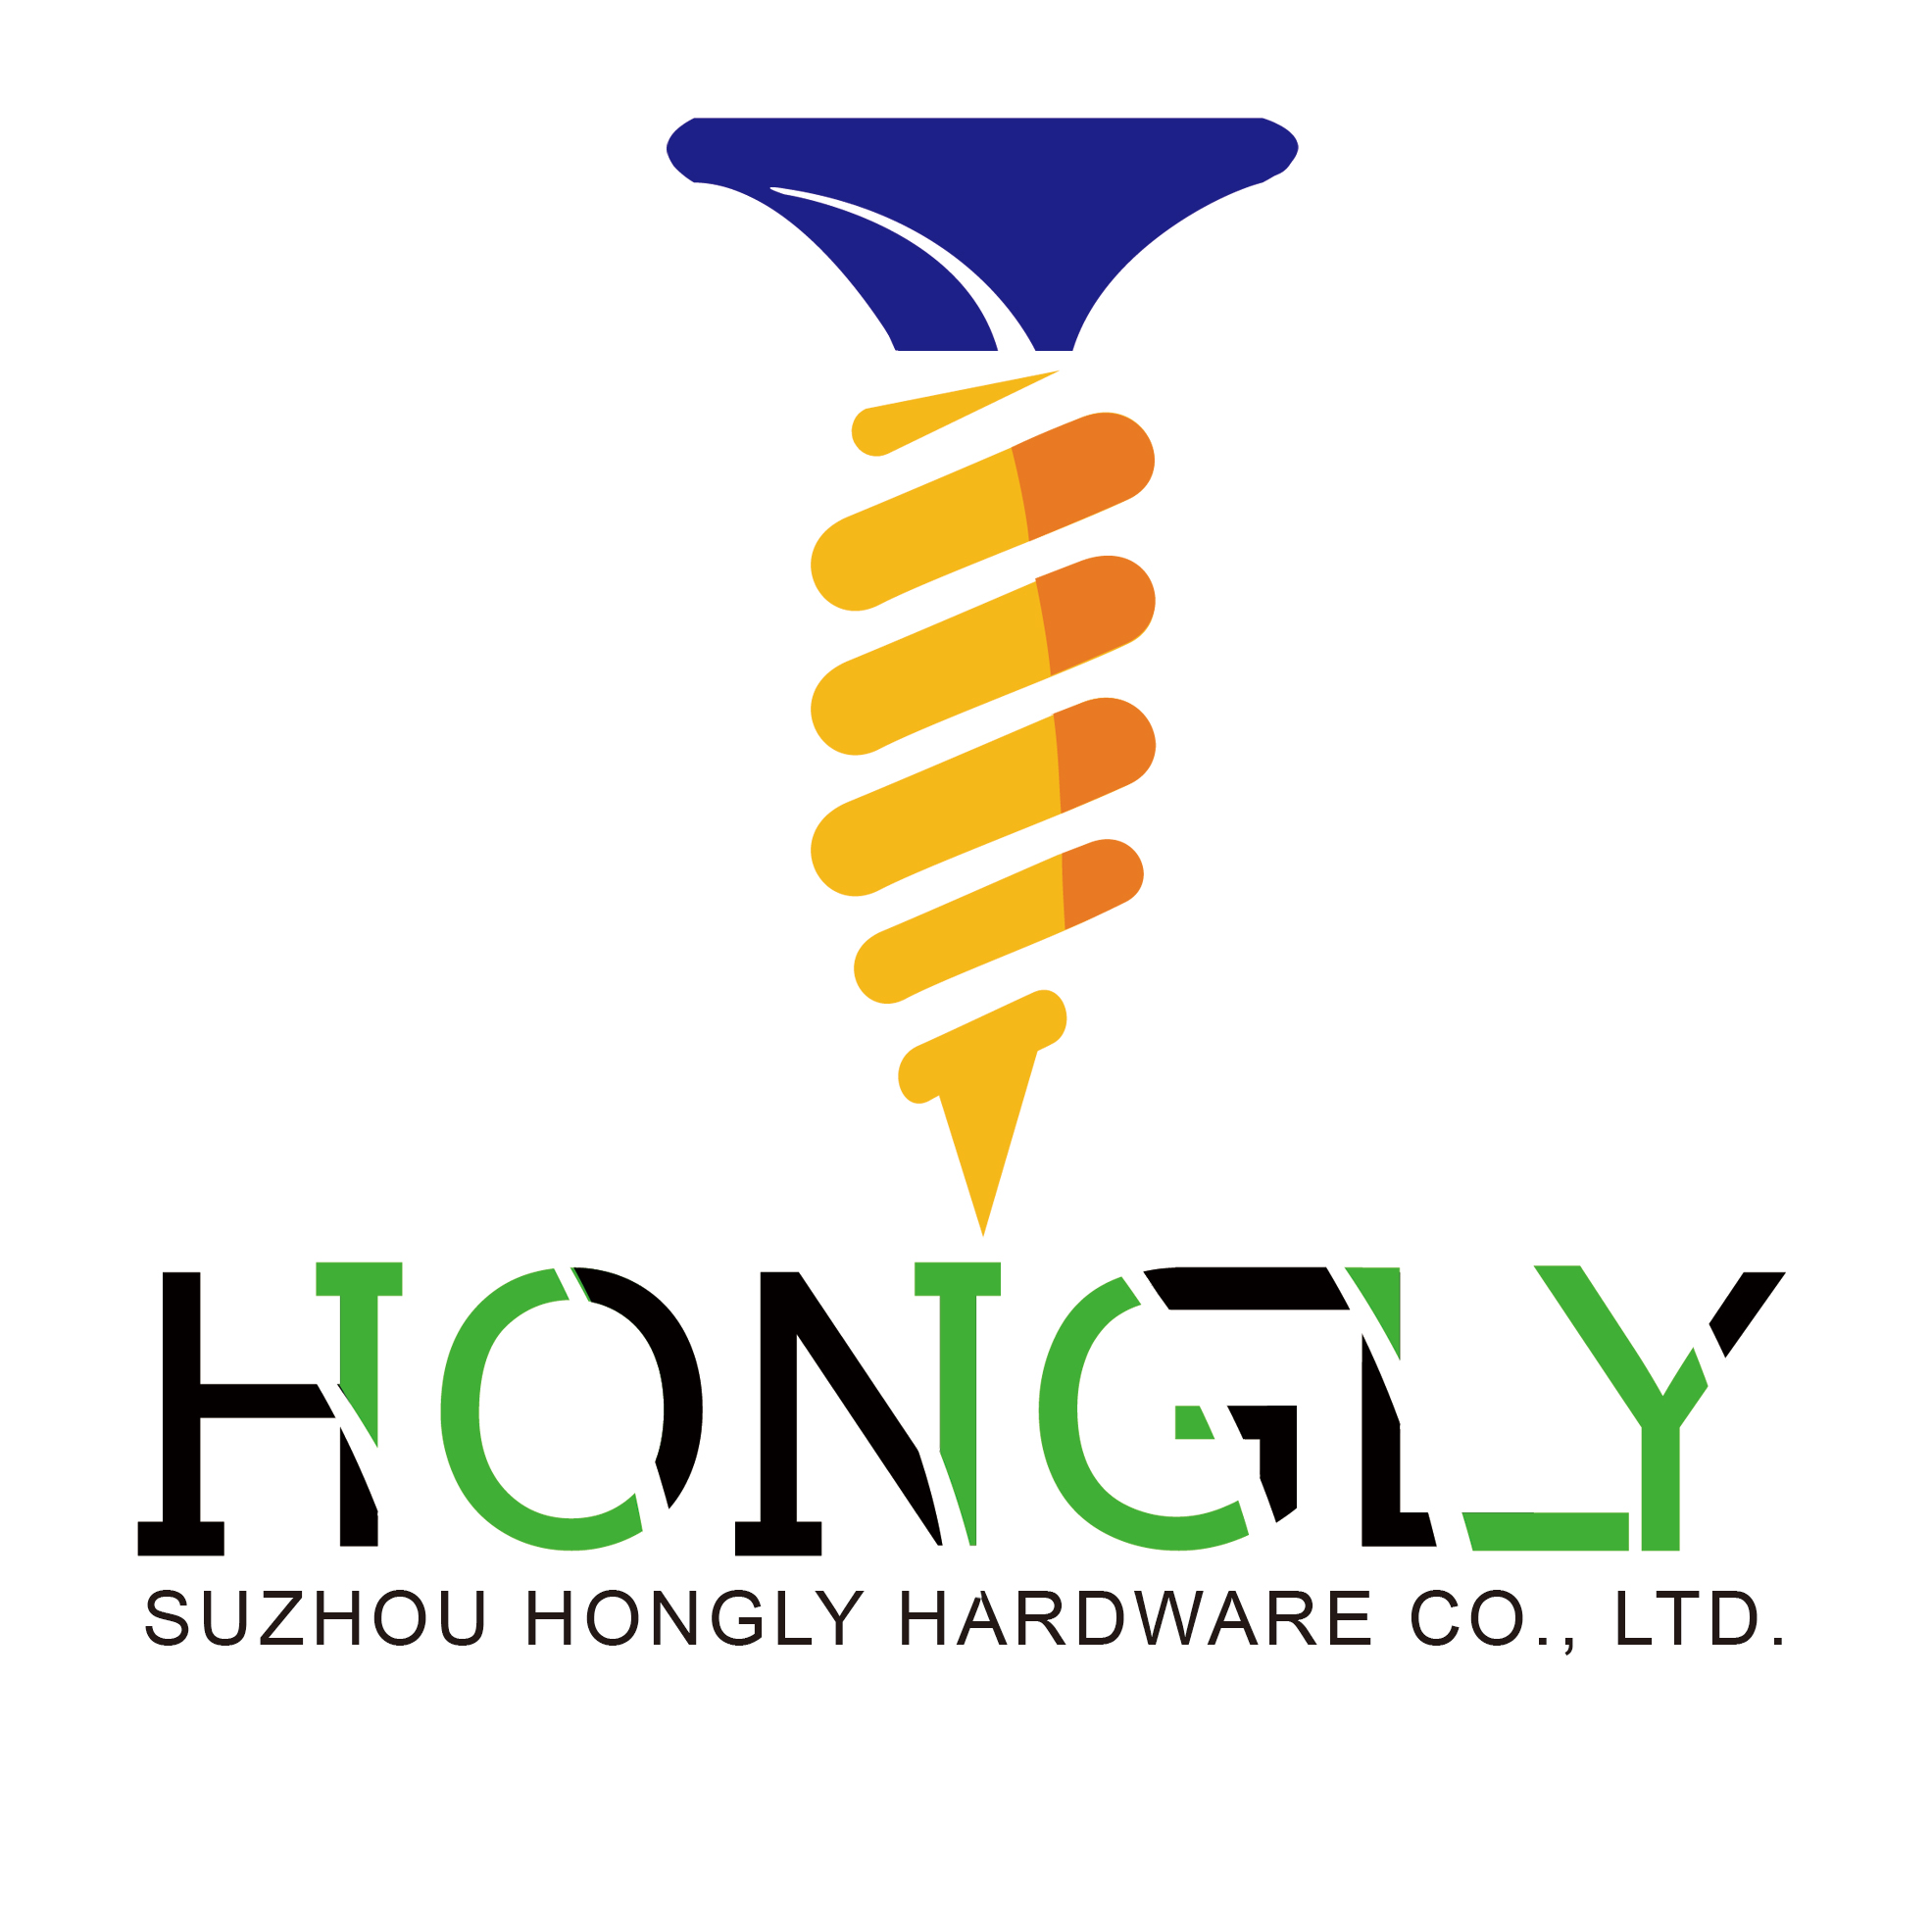 Suzhou Hongly Hardware Co., Ltd